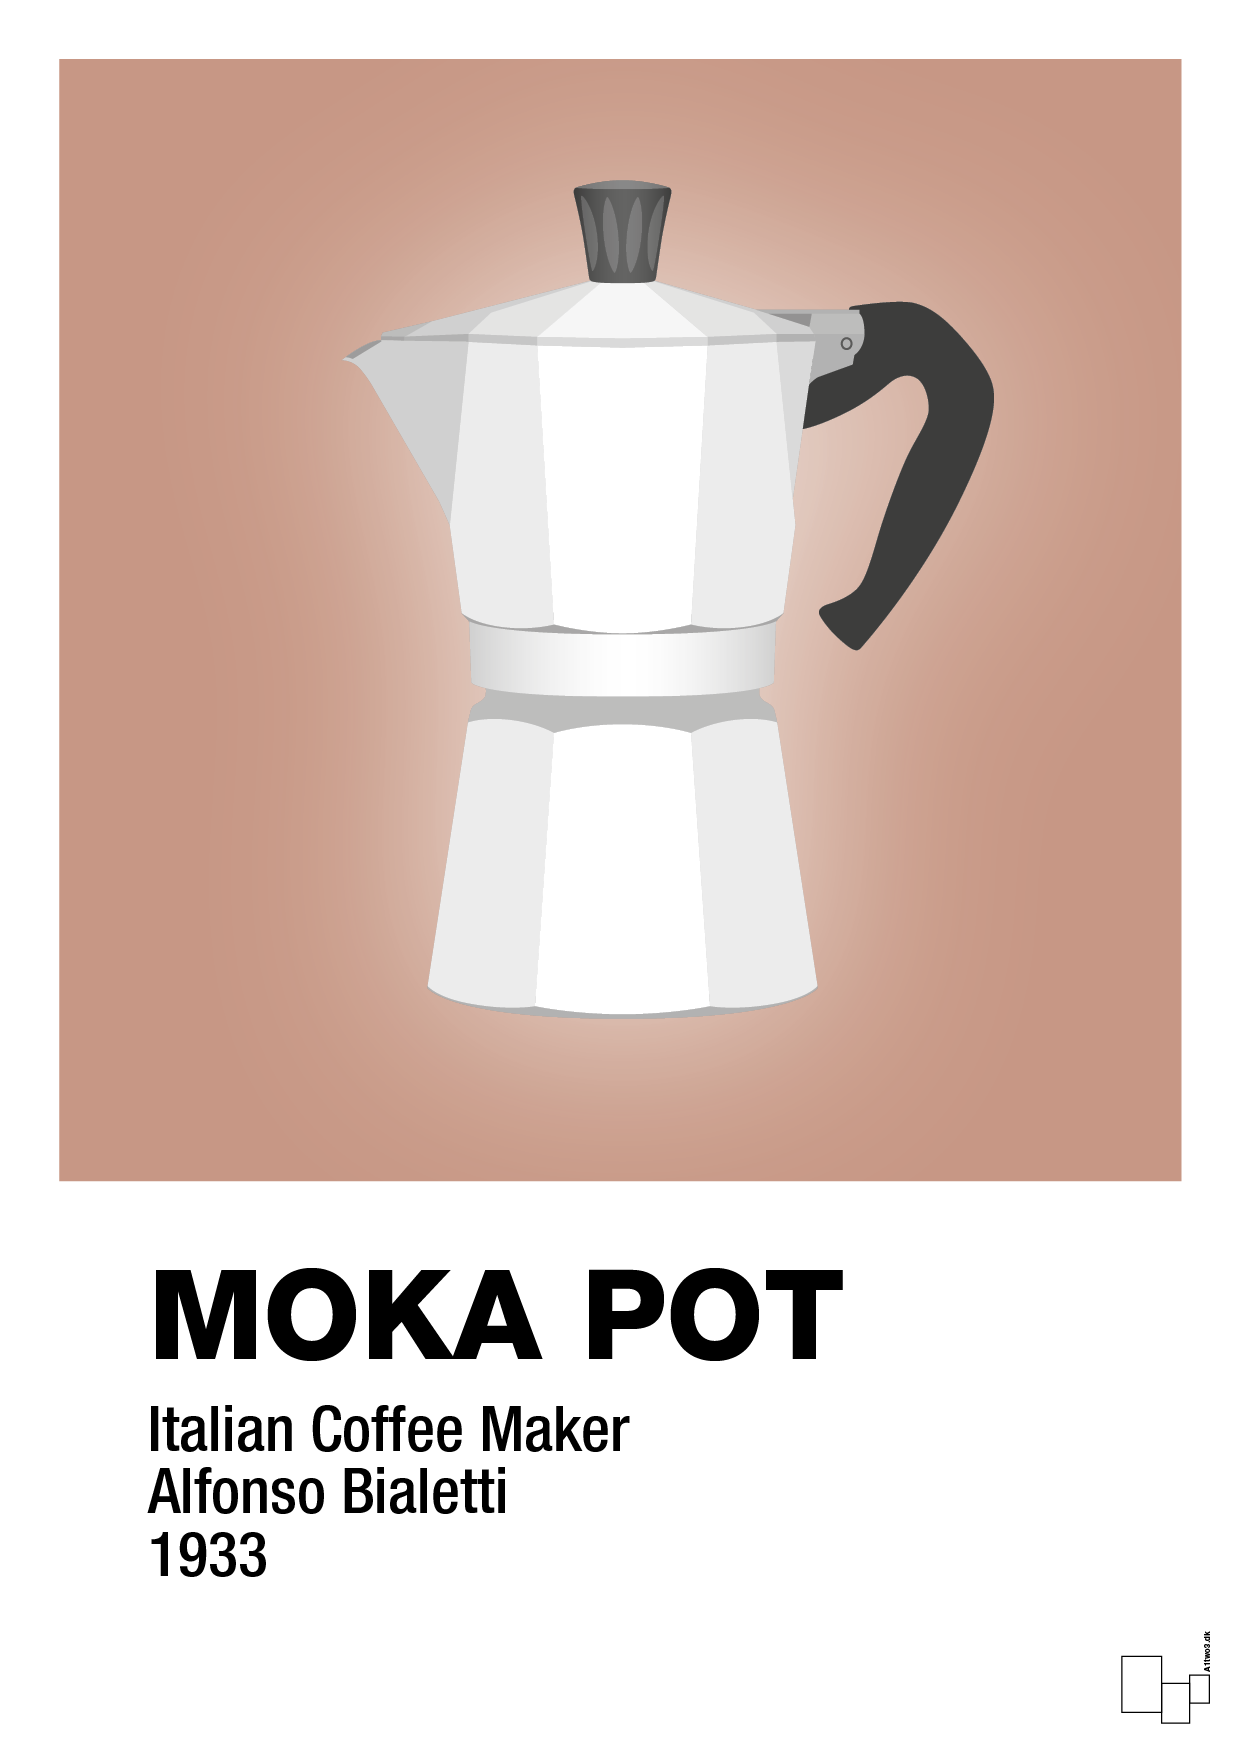 moka pot - Plakat med Mad & Drikke i Powder